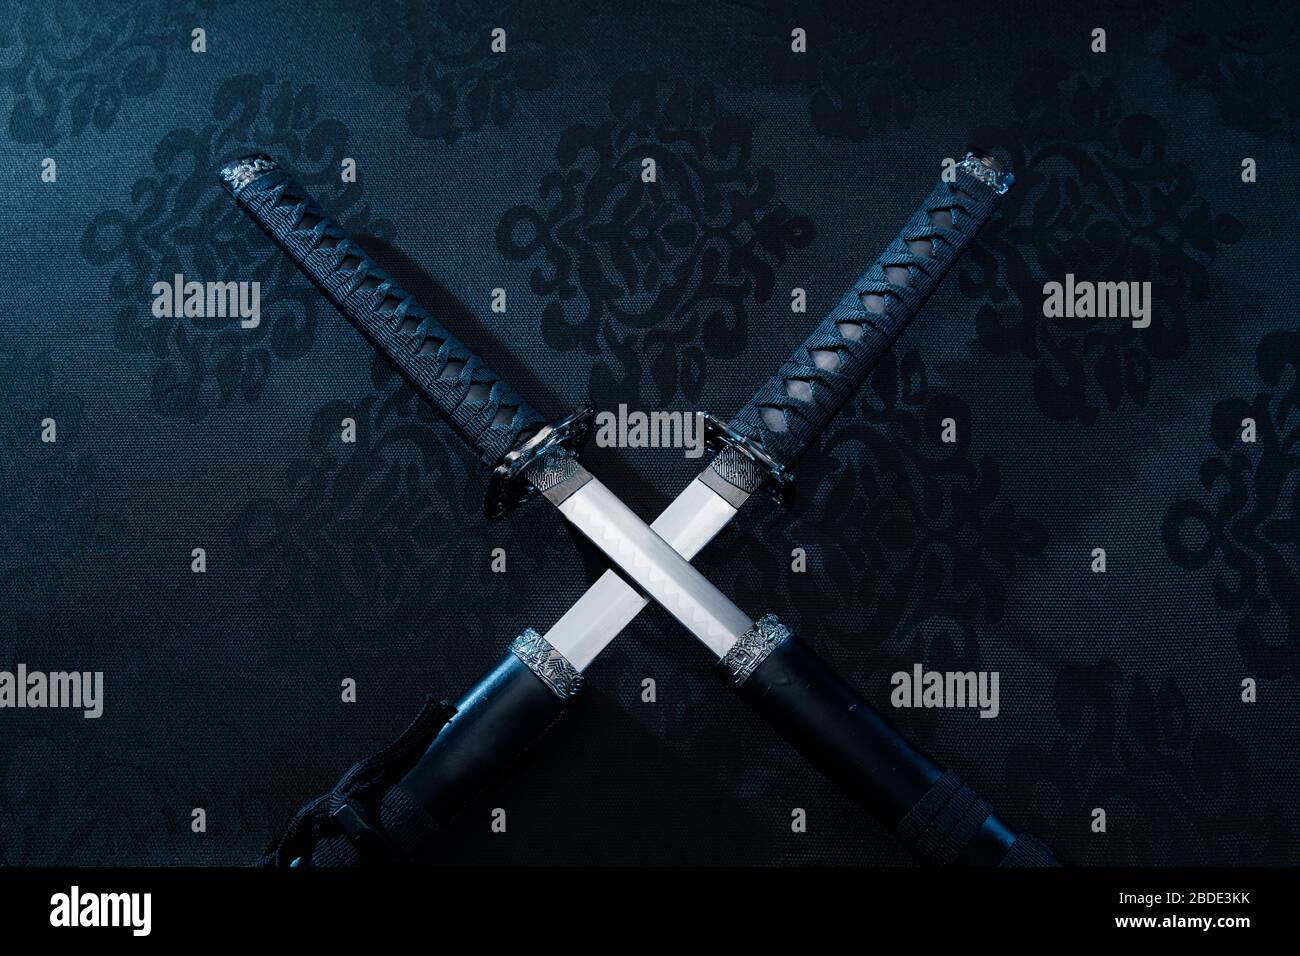 Two katanas, partially drawn blades on fabric with symbols Stock Photo